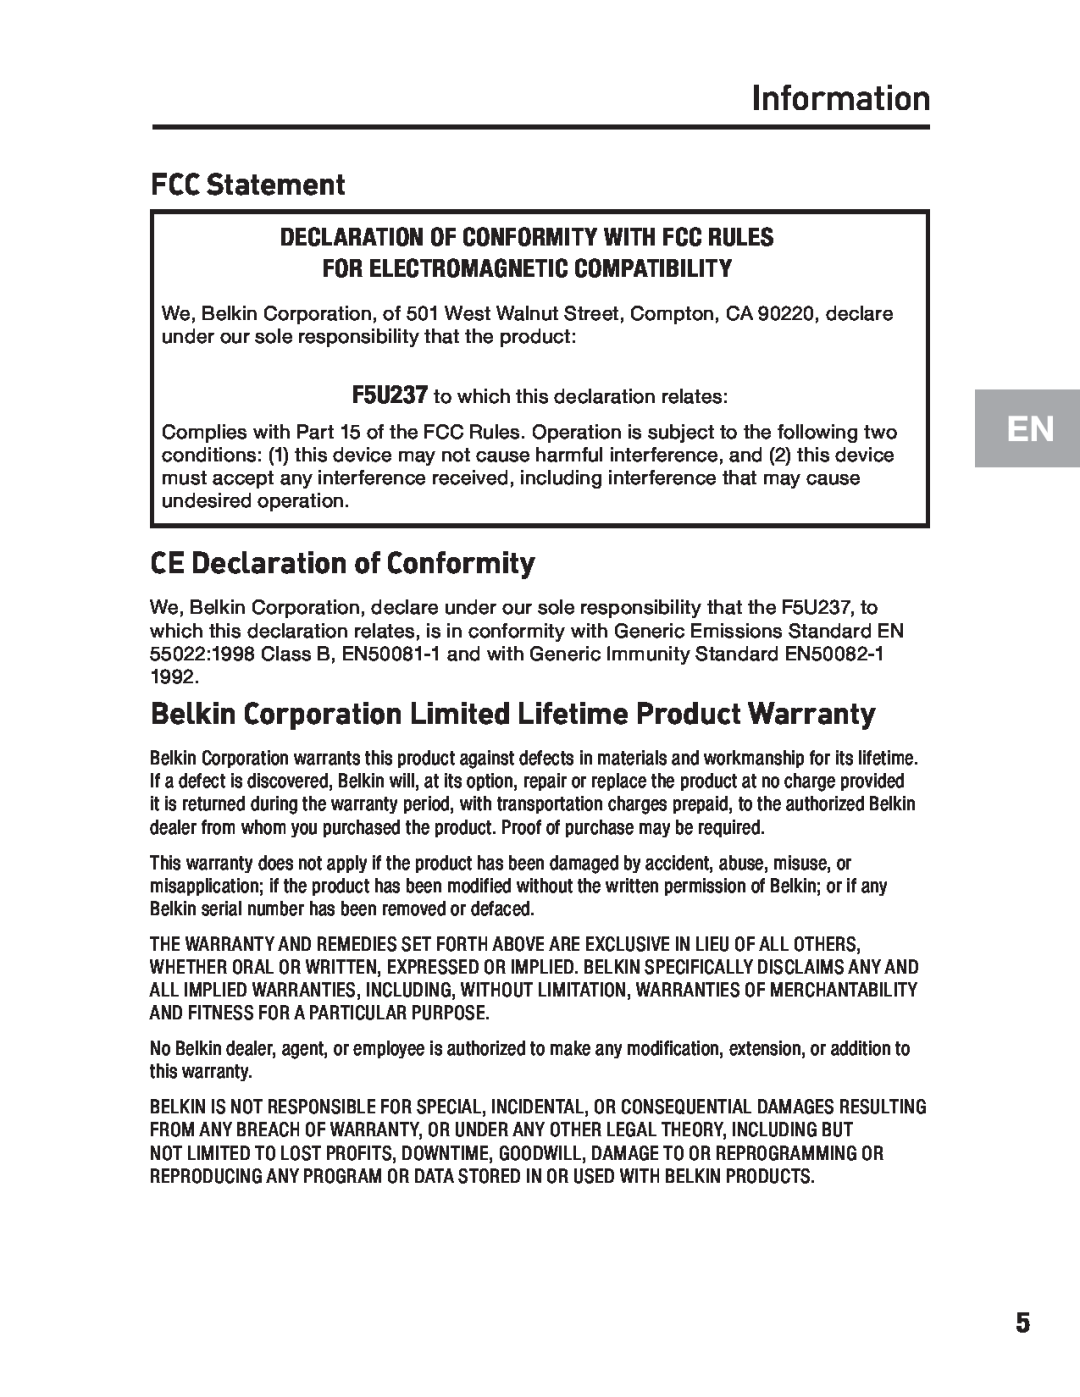 Belkin F5U237 user manual Information, FCC Statement, CE Declaration of Conformity 